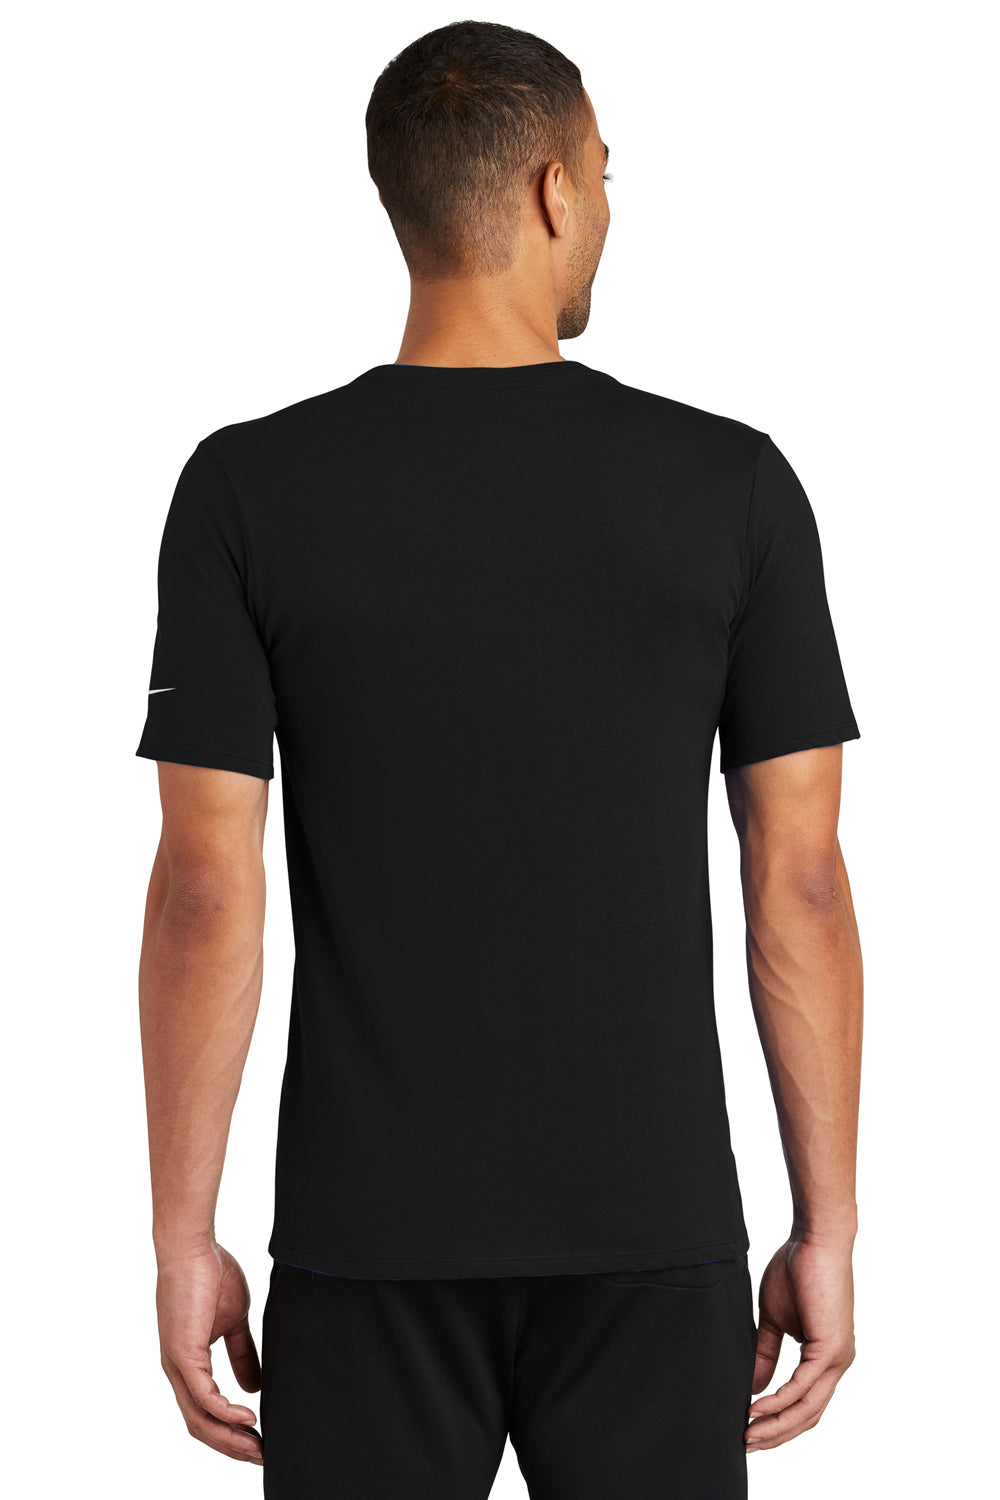 Nike NKBQ5231 Mens Dri-Fit Moisture Wicking Short Sleeve Crewneck T-Shirt Black Model Back